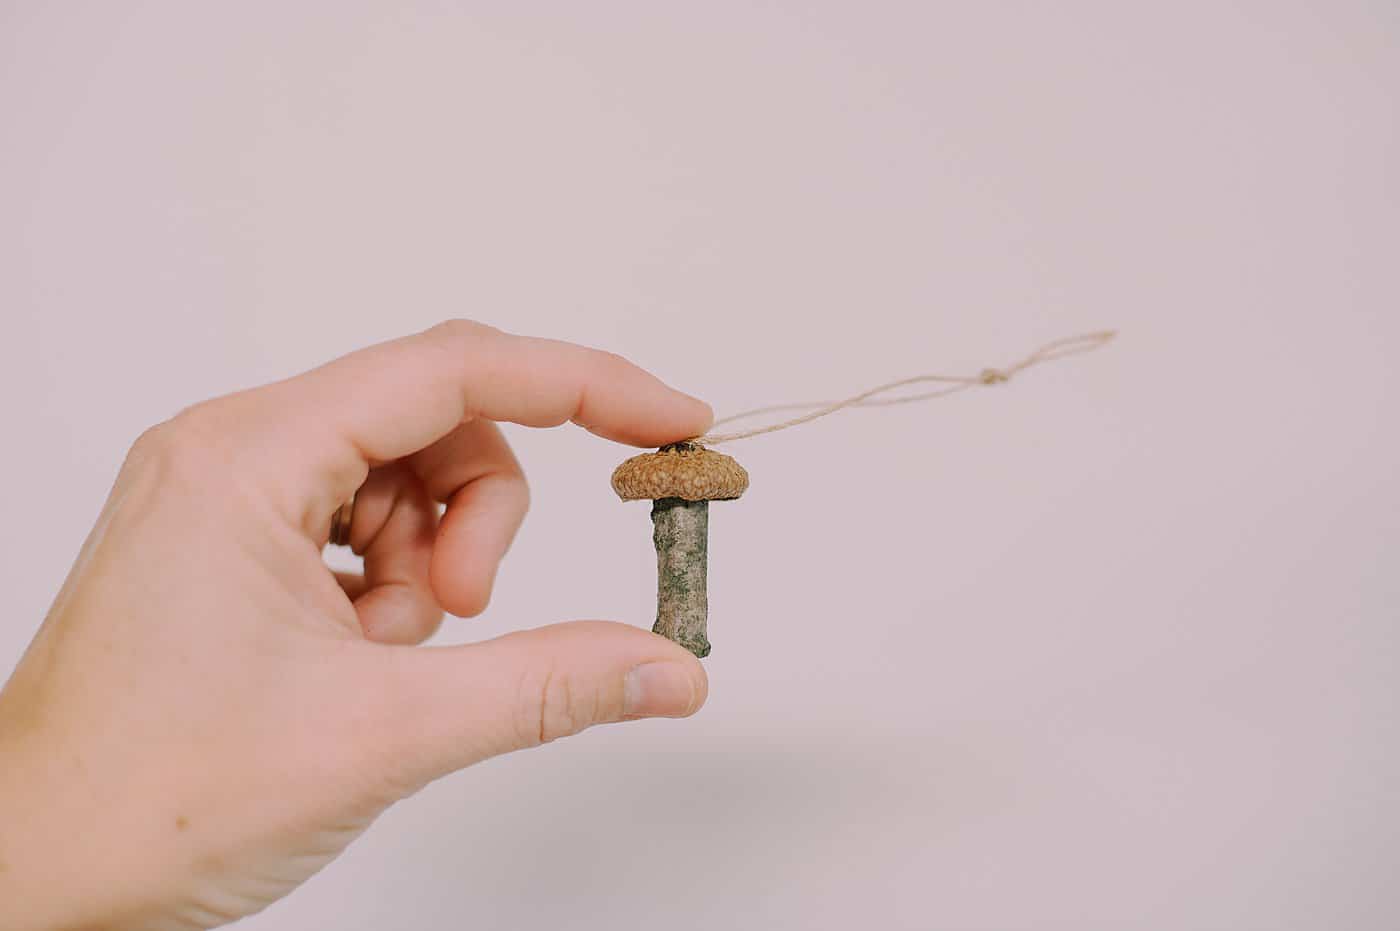 How to make tiny mushroom ornaments using sticks and acorn caps.